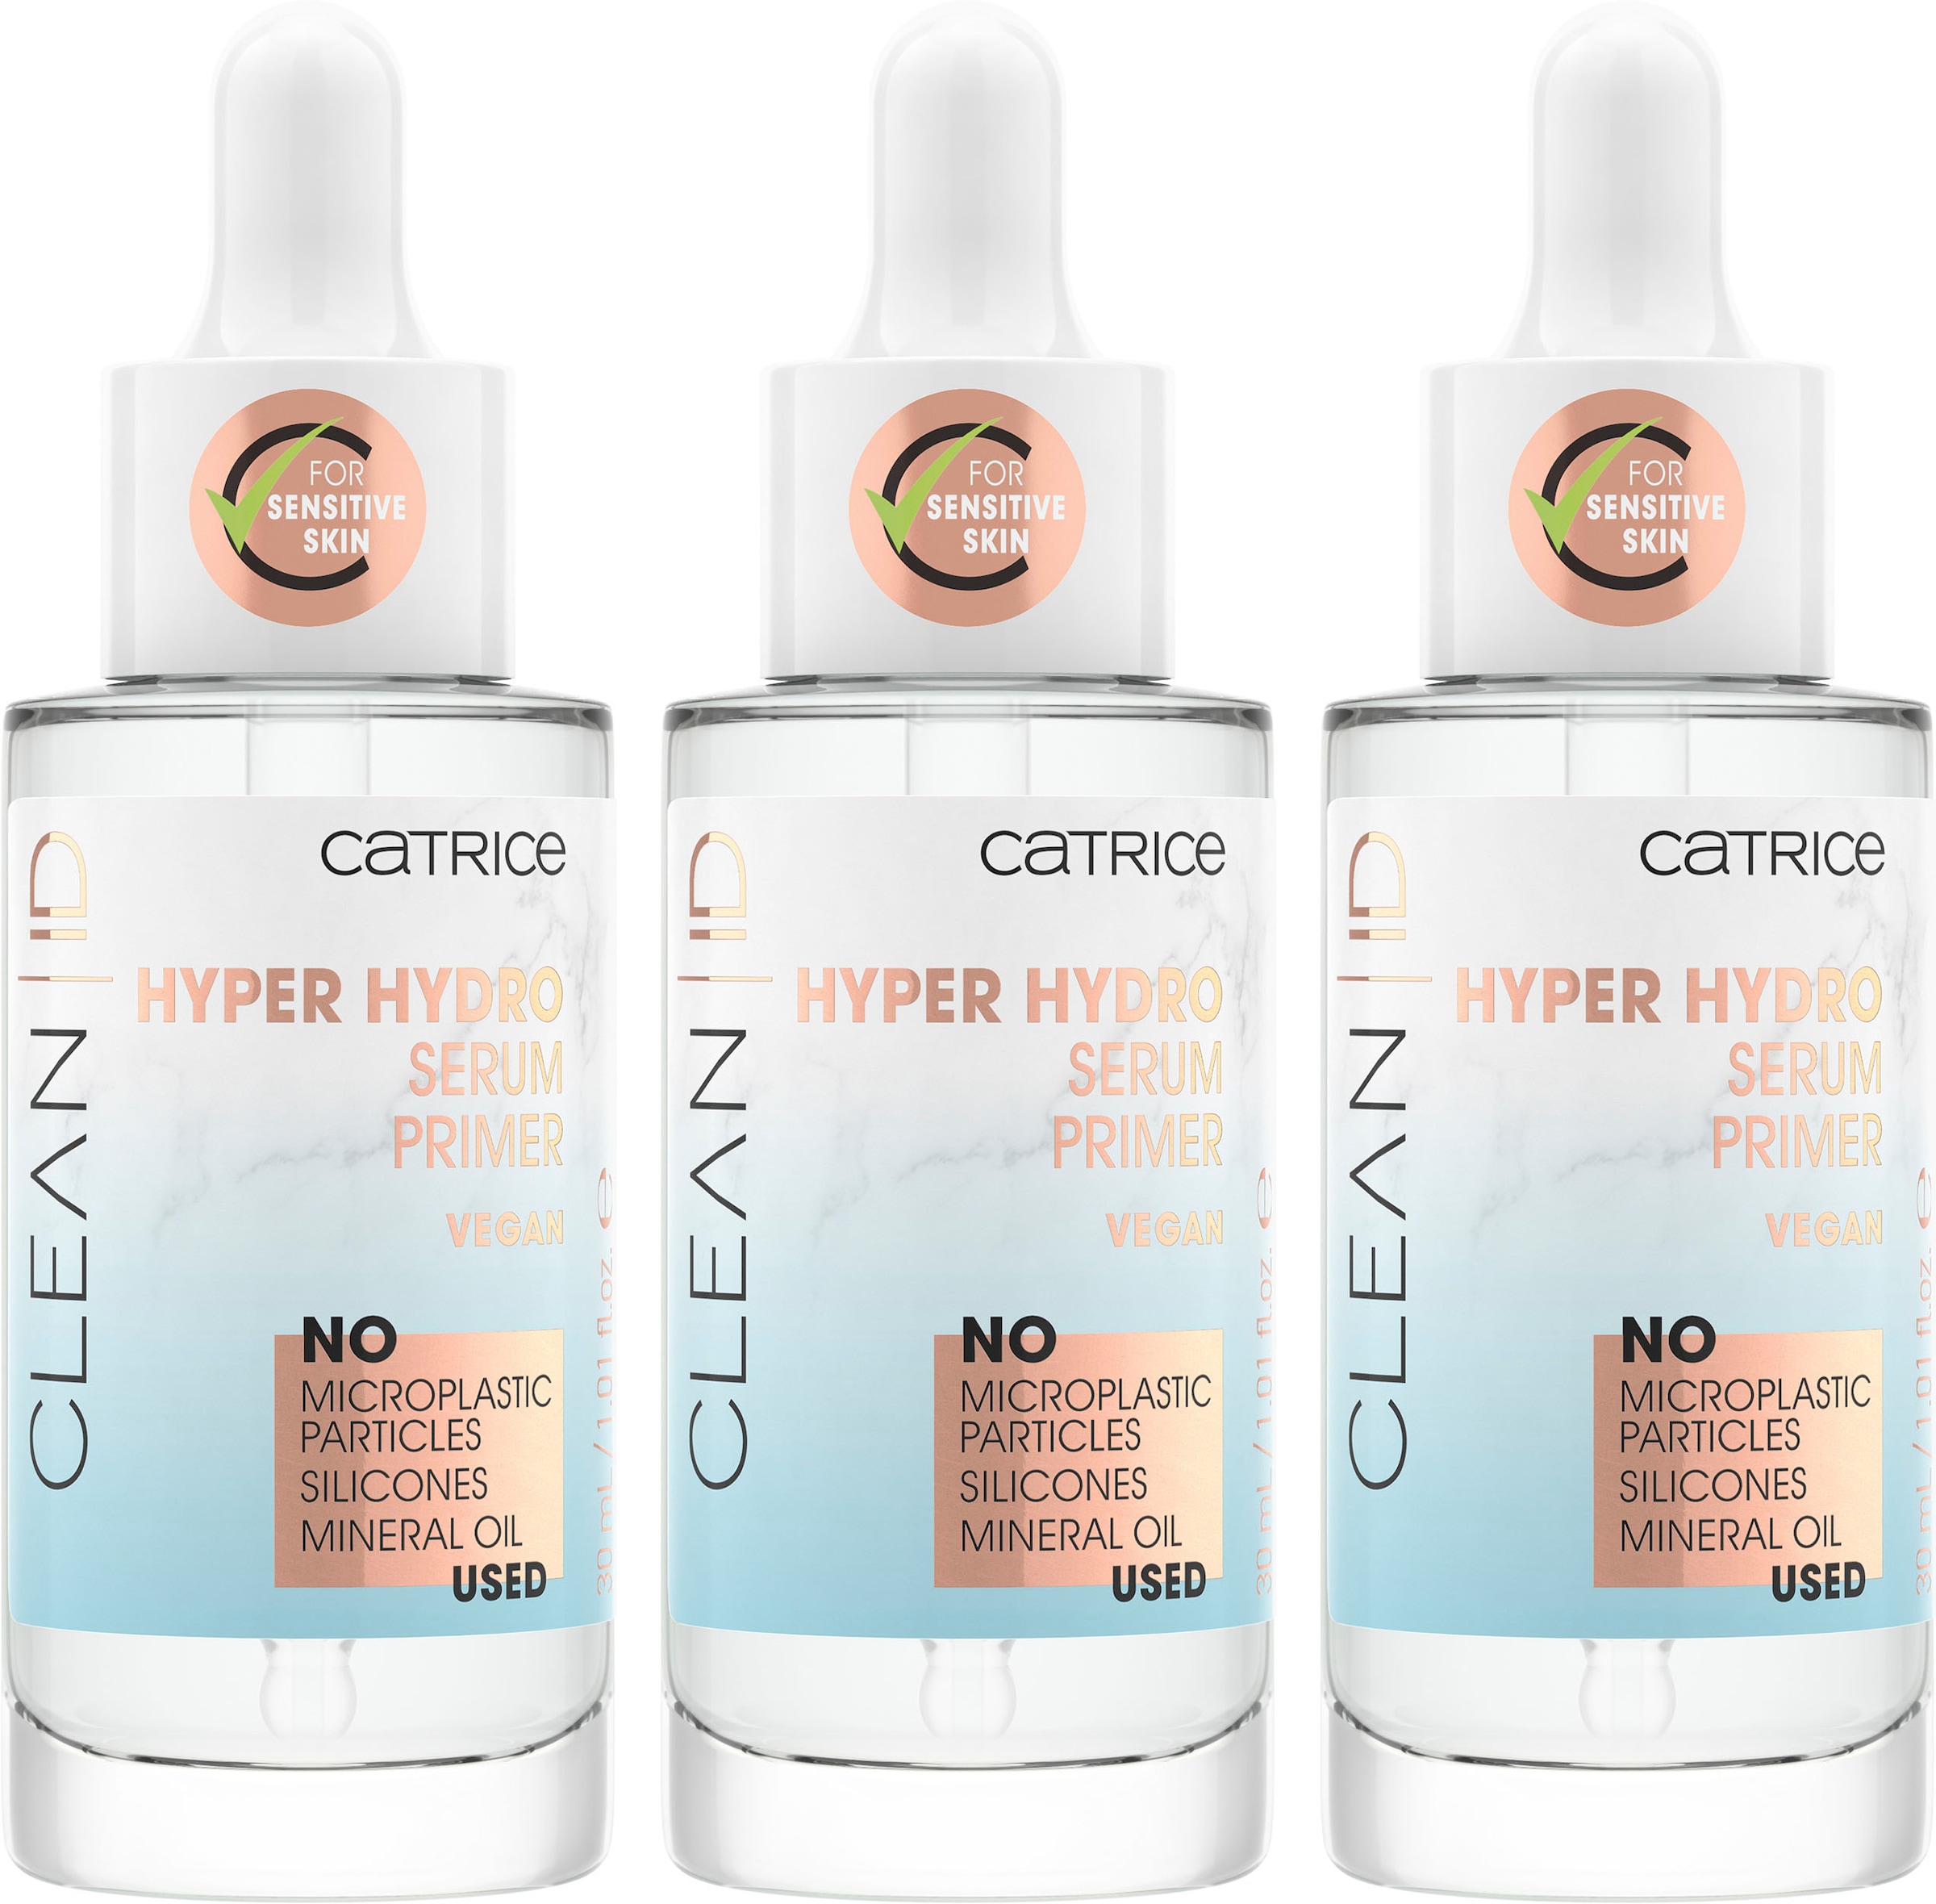 bei Primer«, ID Clean (Set, tlg.) Serum OTTOversand Hydro 3 Primer »Catrice Hyper Catrice